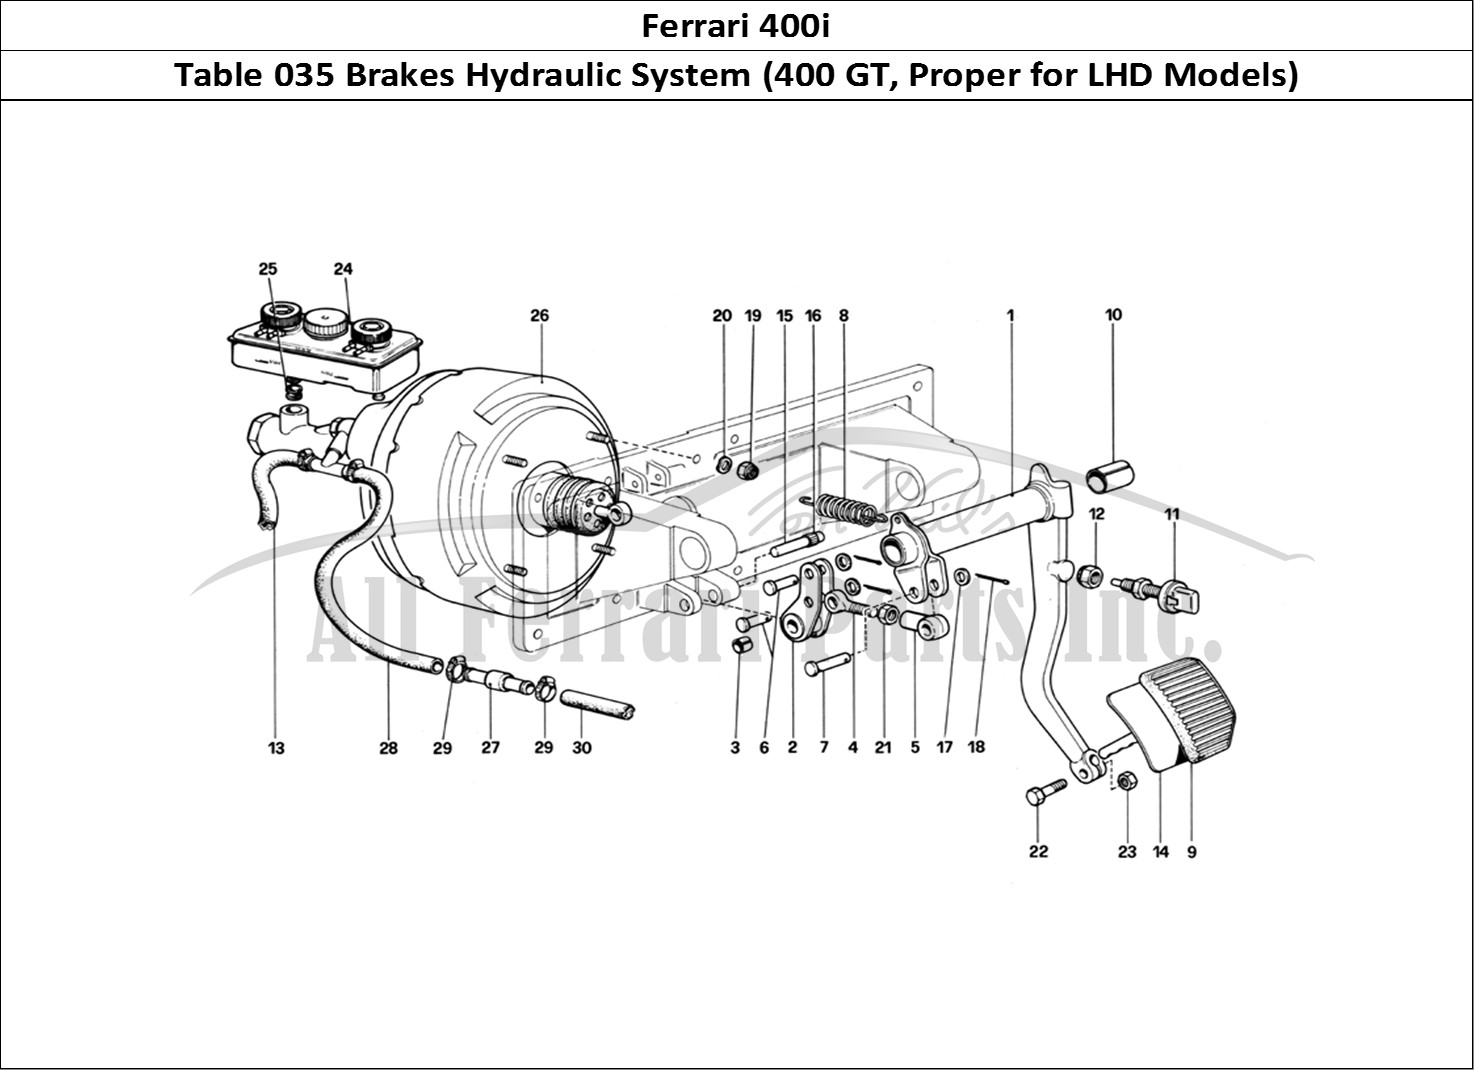 Ferrari Parts Ferrari 400i (1983 Mechanical) Page 035 Brakes Hydraulic Controll